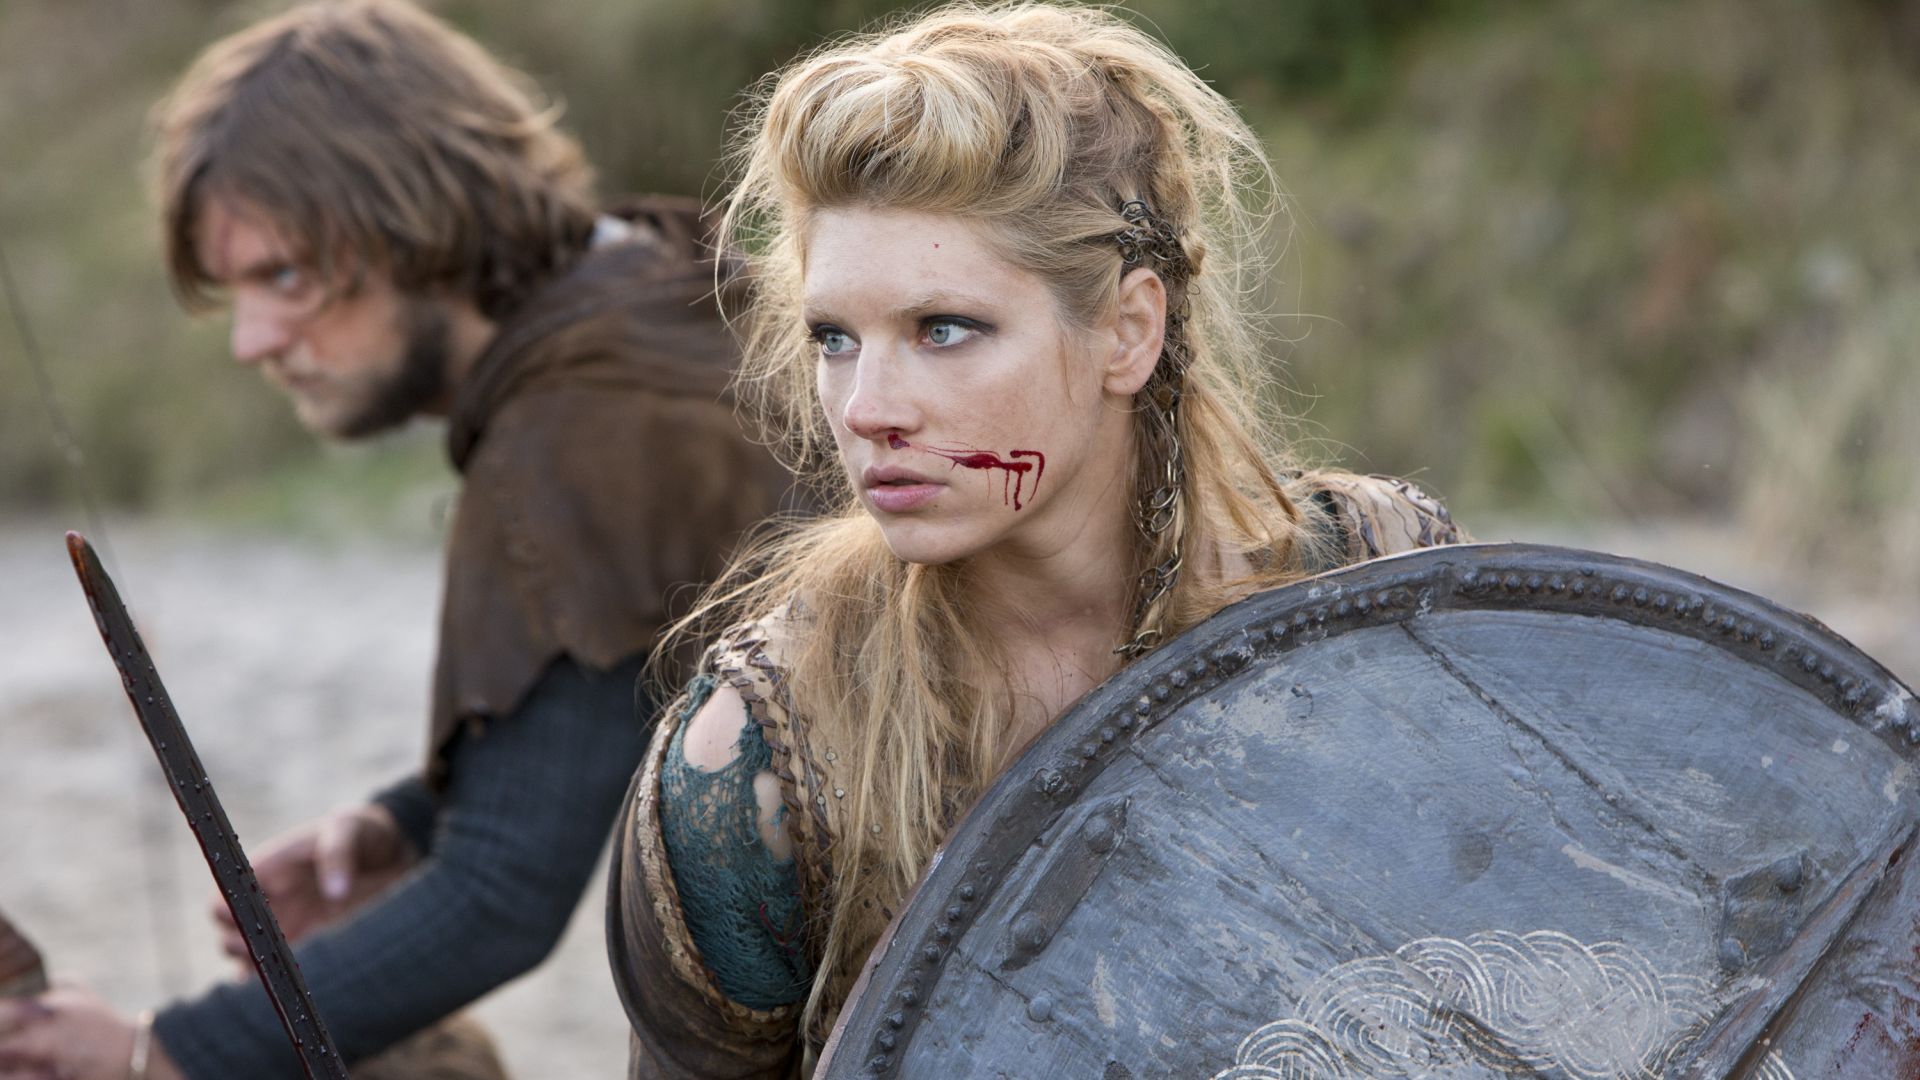 Wallpaper Vikings tv show, actress, fight